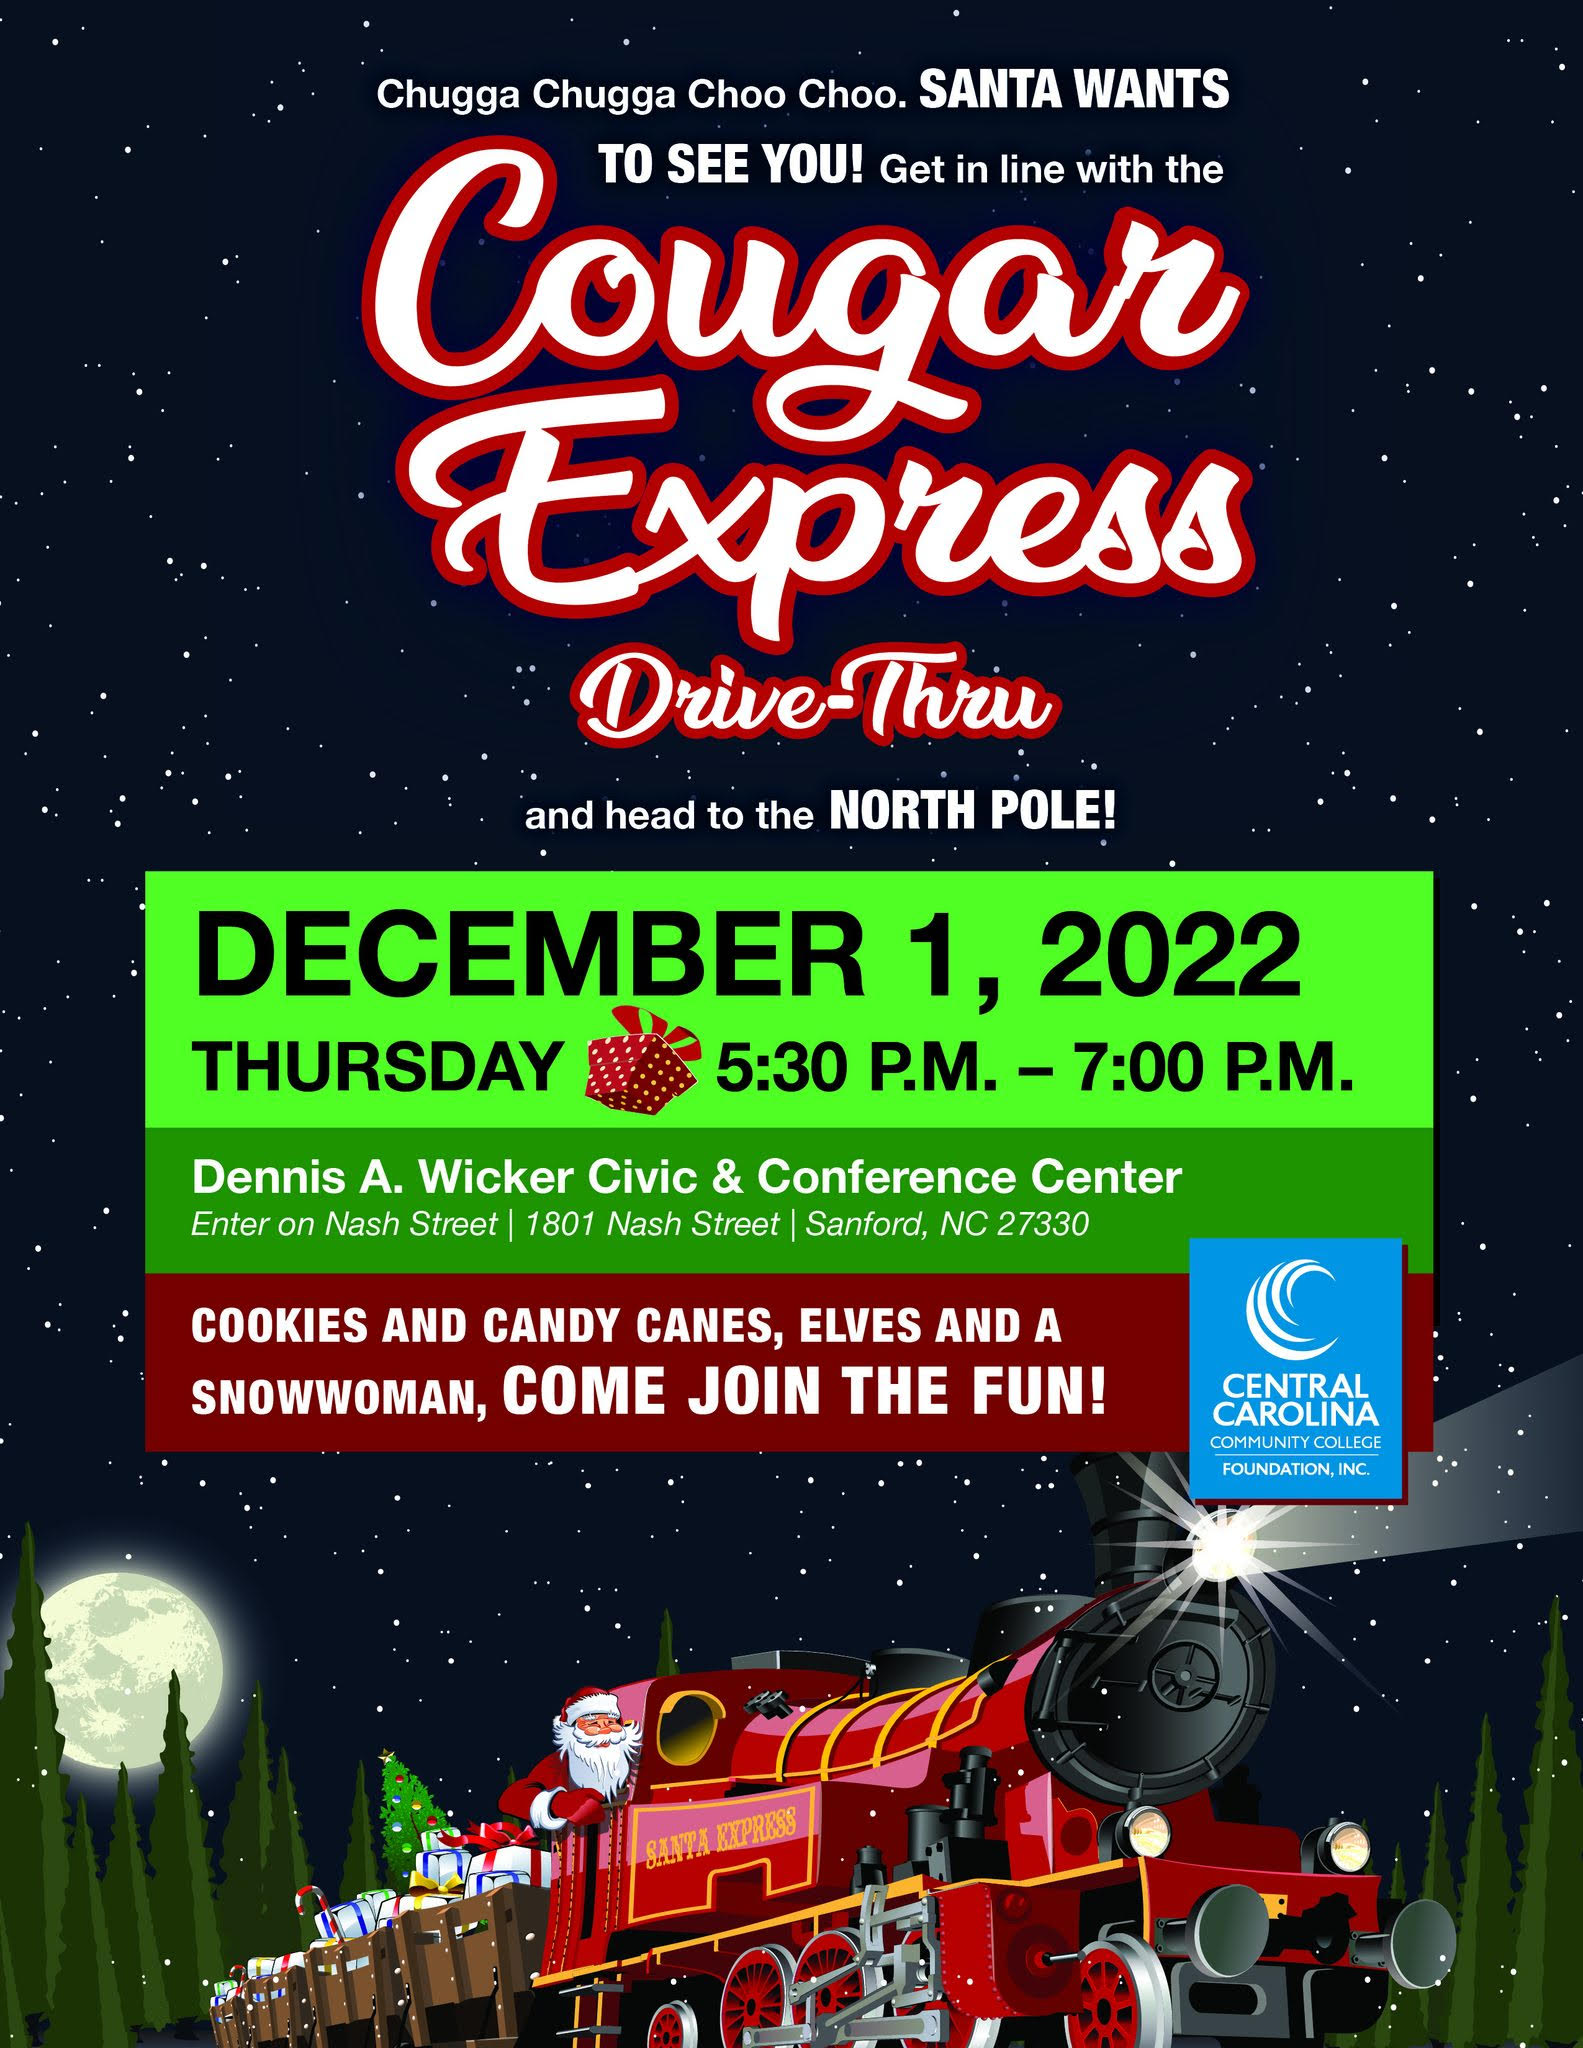 Cougar Express holiday drive-thru event set for Dec. 1